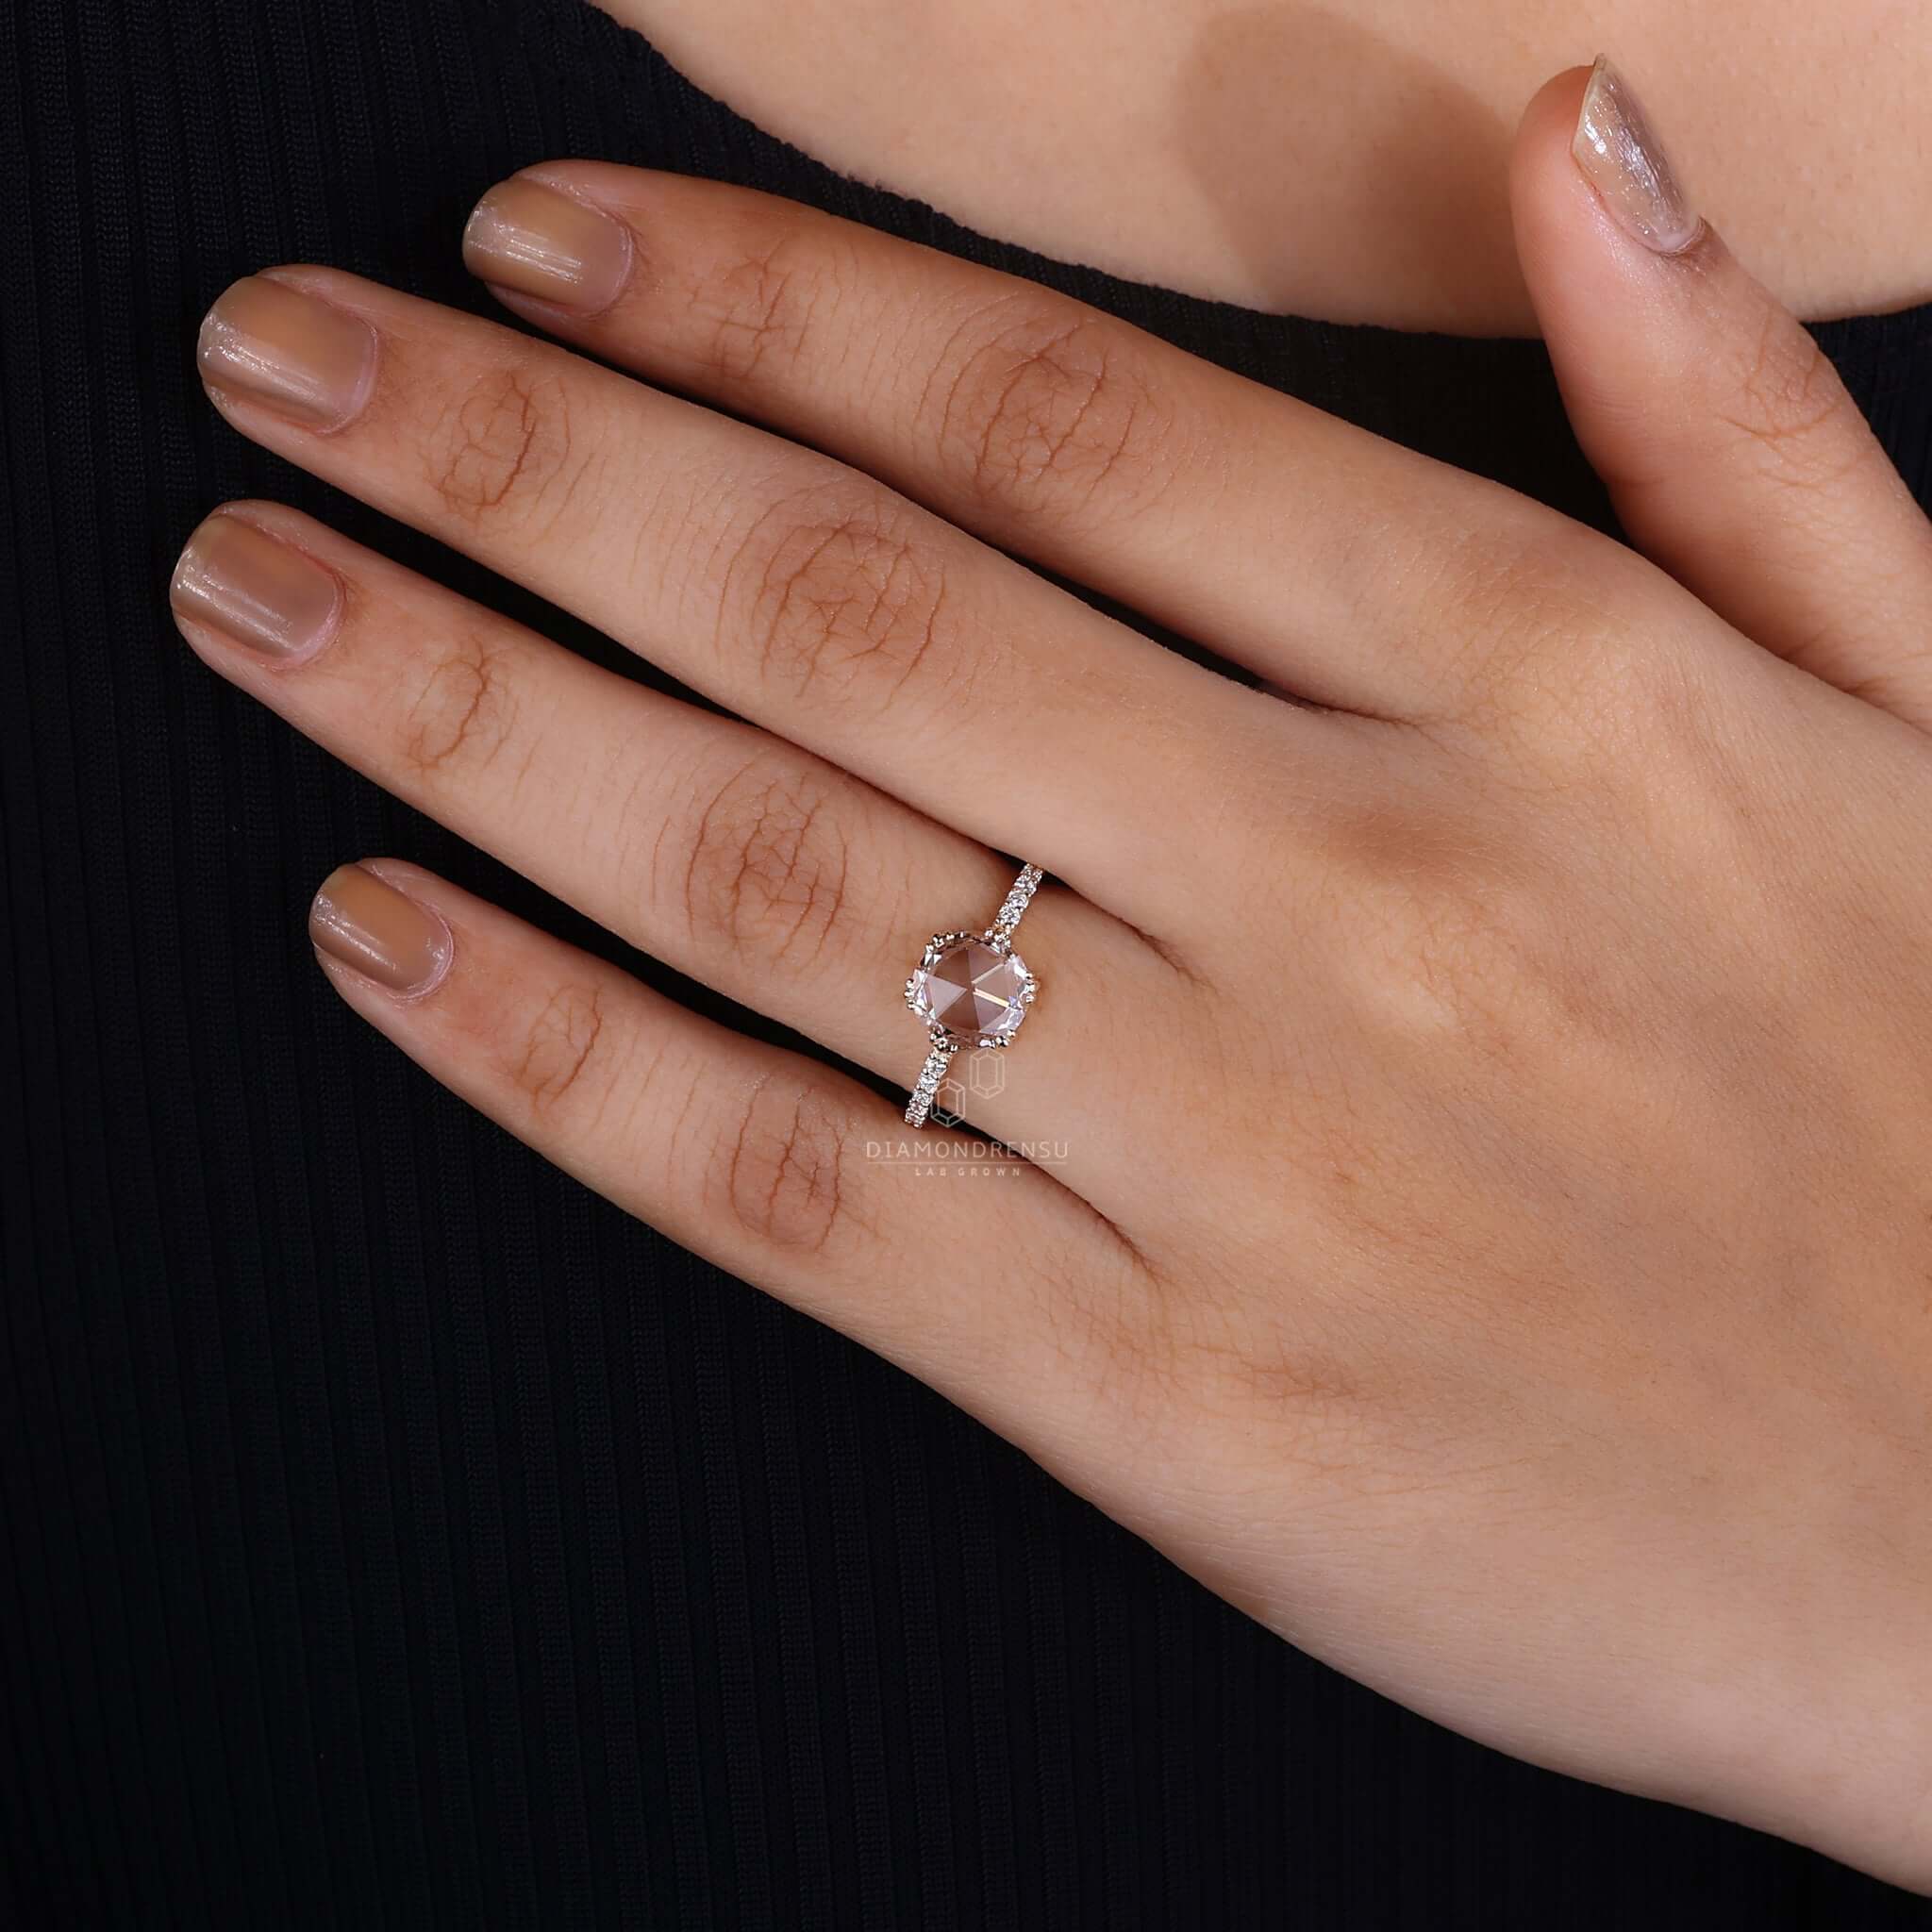 Vintage-Inspired Rose Cut Diamond Ring